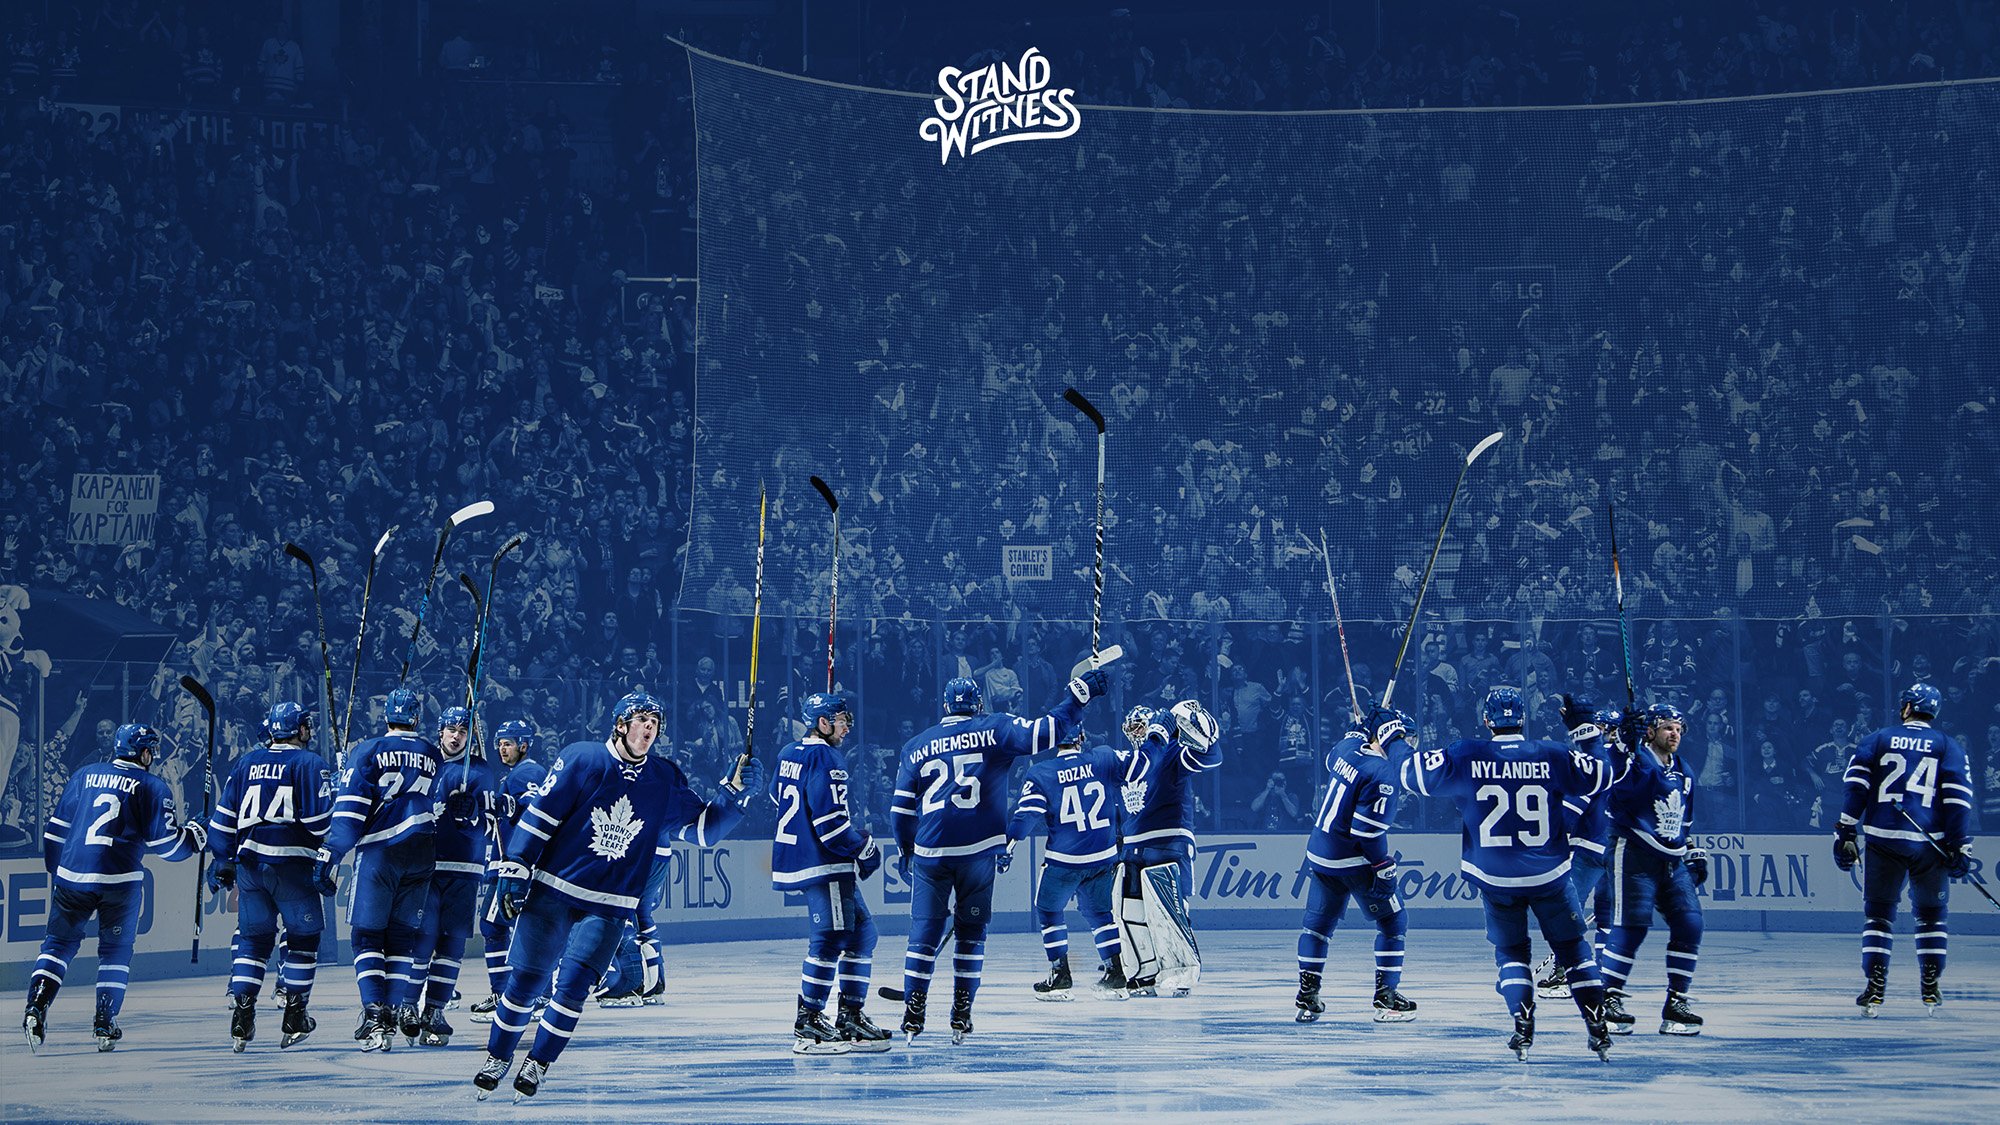 Toronto-Maple-Leafs-Wallpaper-4